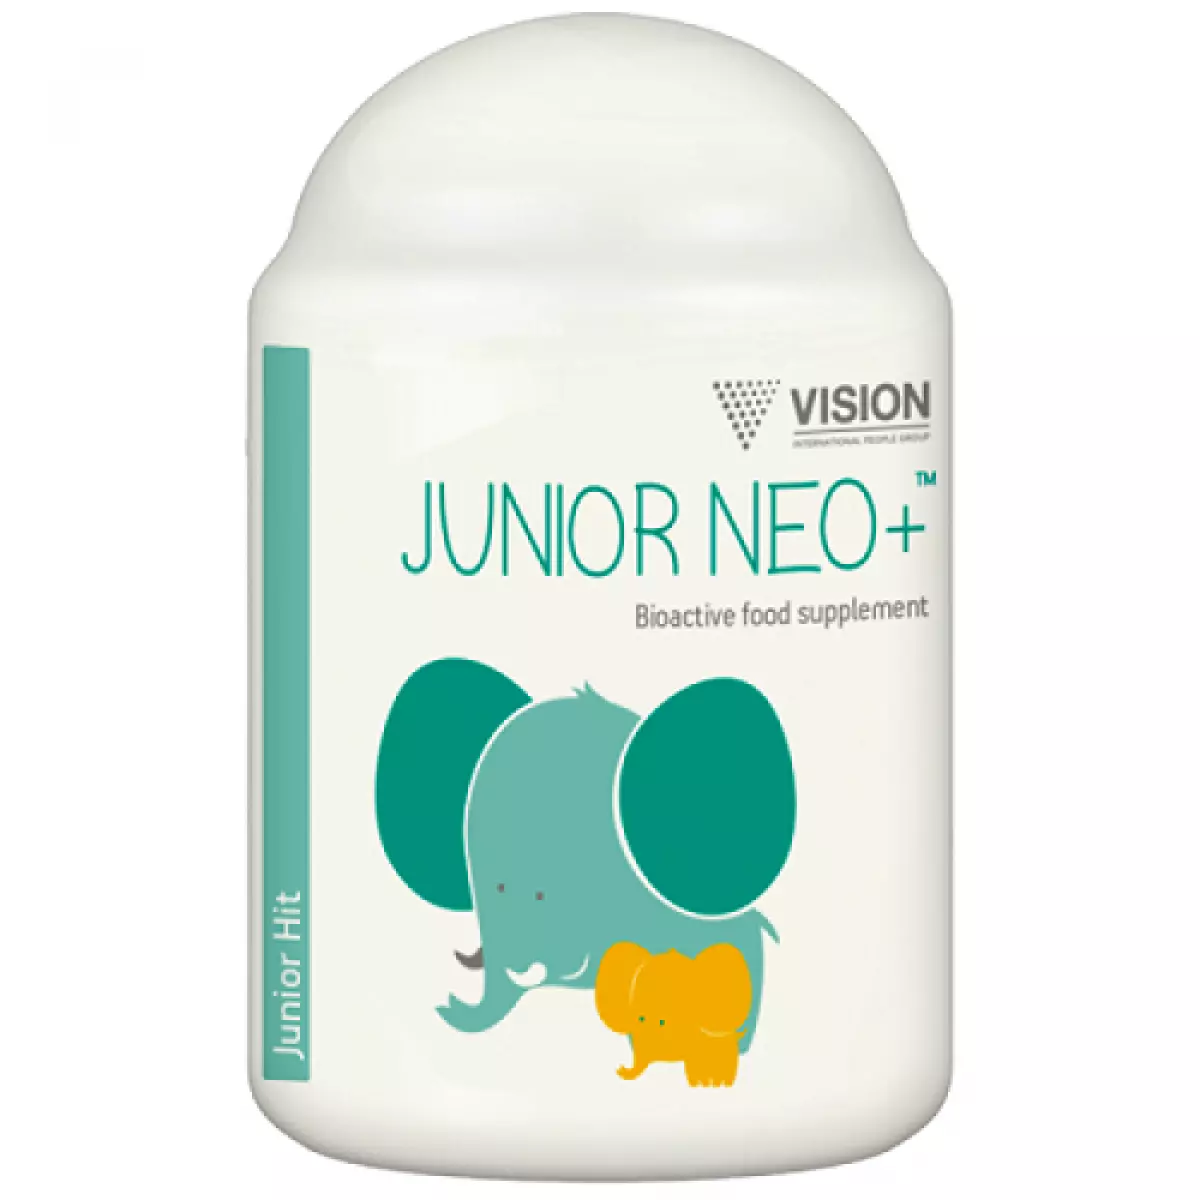 Hộp Vision Lifepac Junior Neo+ 60 viên